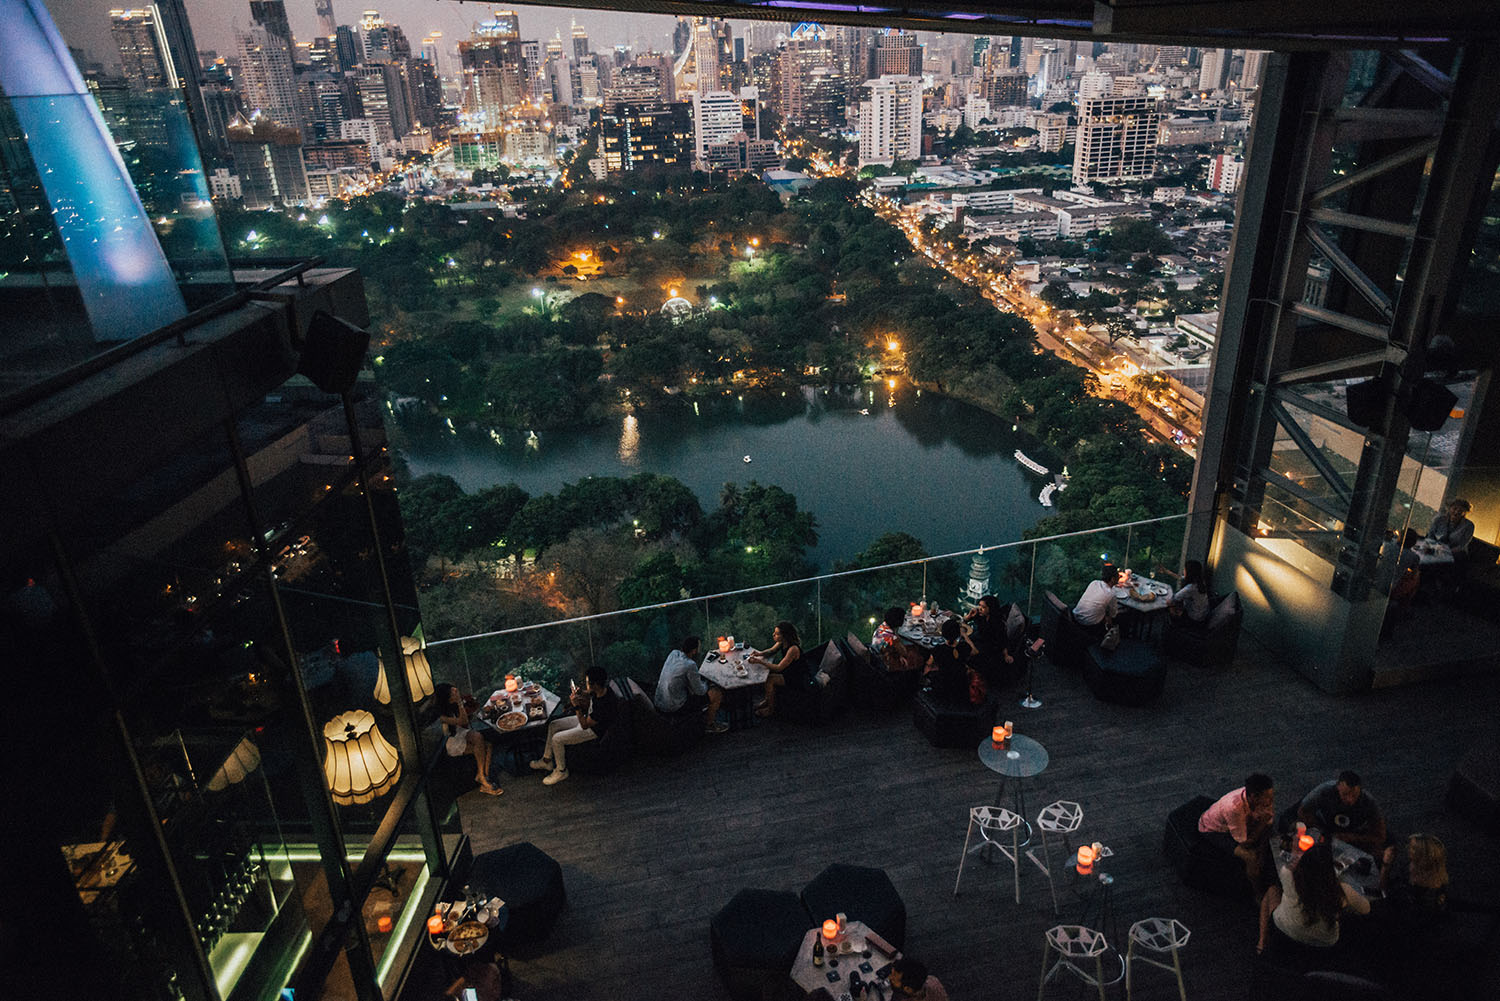 Park Society, So Sofitel - Rooftop Dining in Bangkok